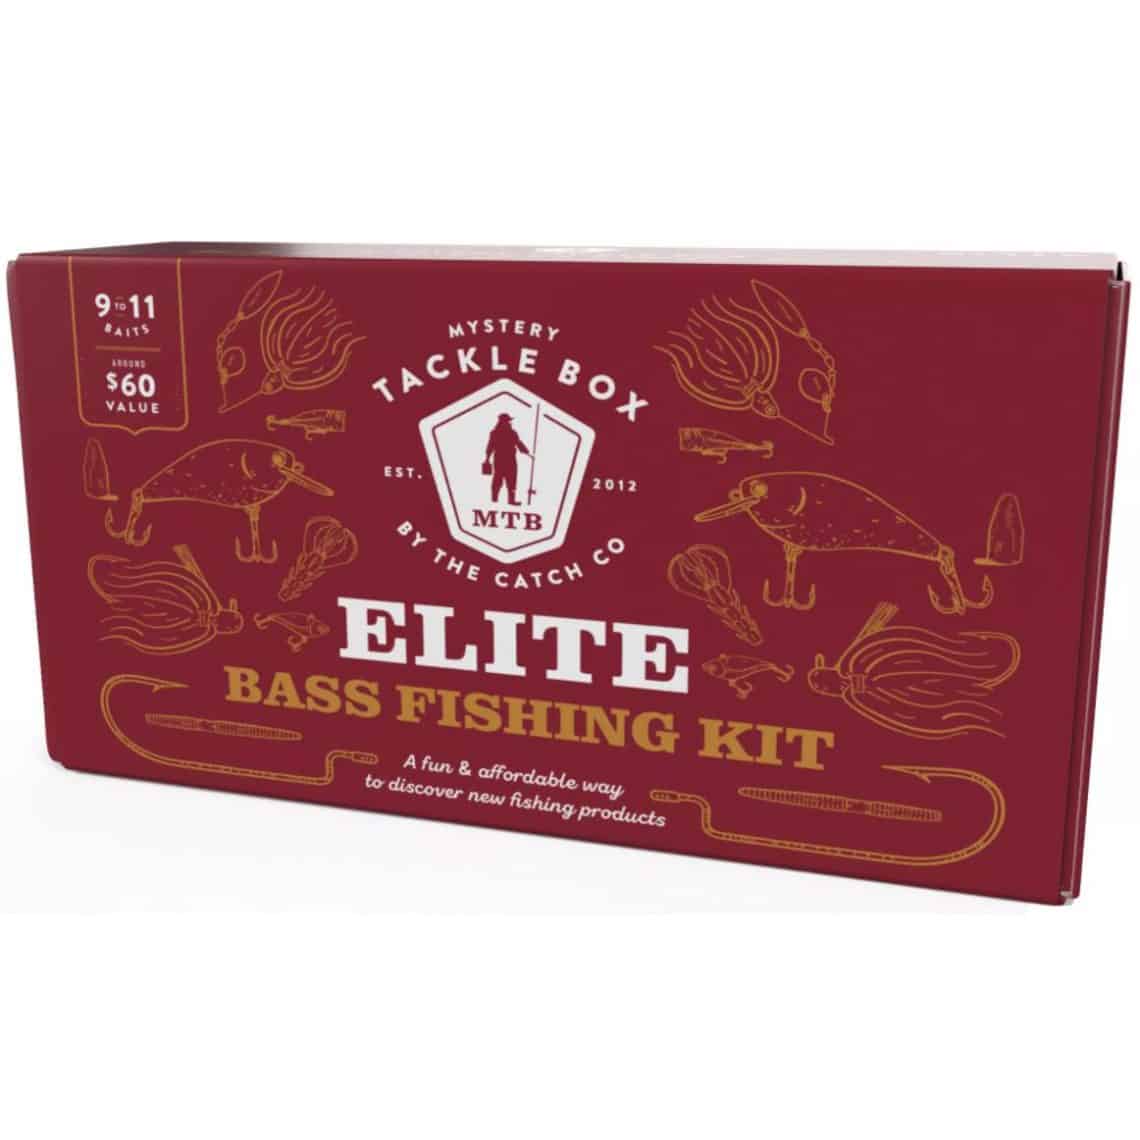 MYSTERY TACKLE BOX ELITE BASS FISHING KIT - Northwoods Wholesale